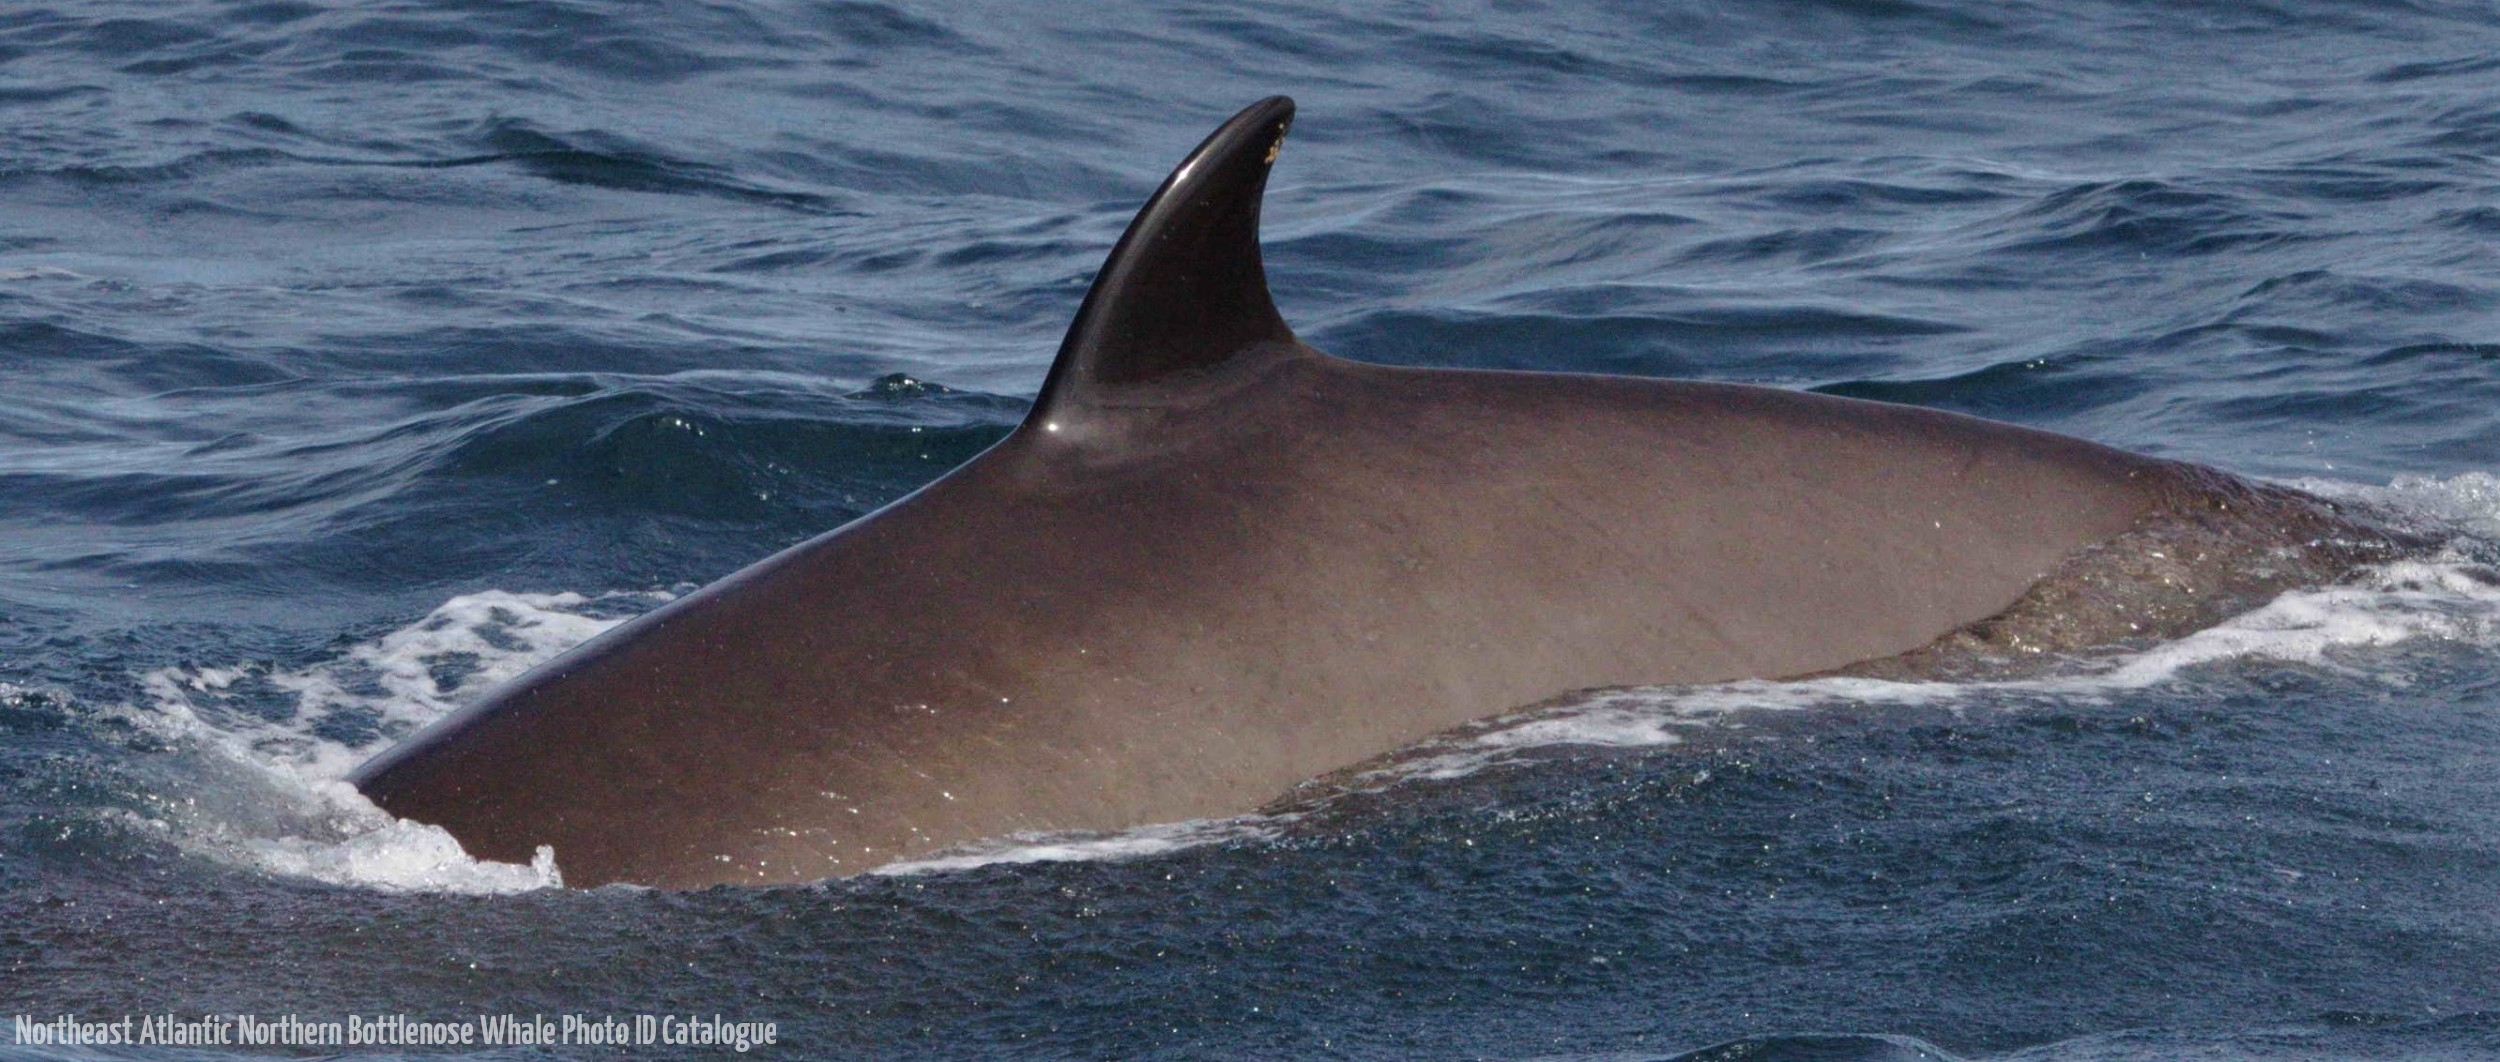 Whale ID: 0042,  Date taken: 12-06-2014,  Photographer: Lucia M. Martín López